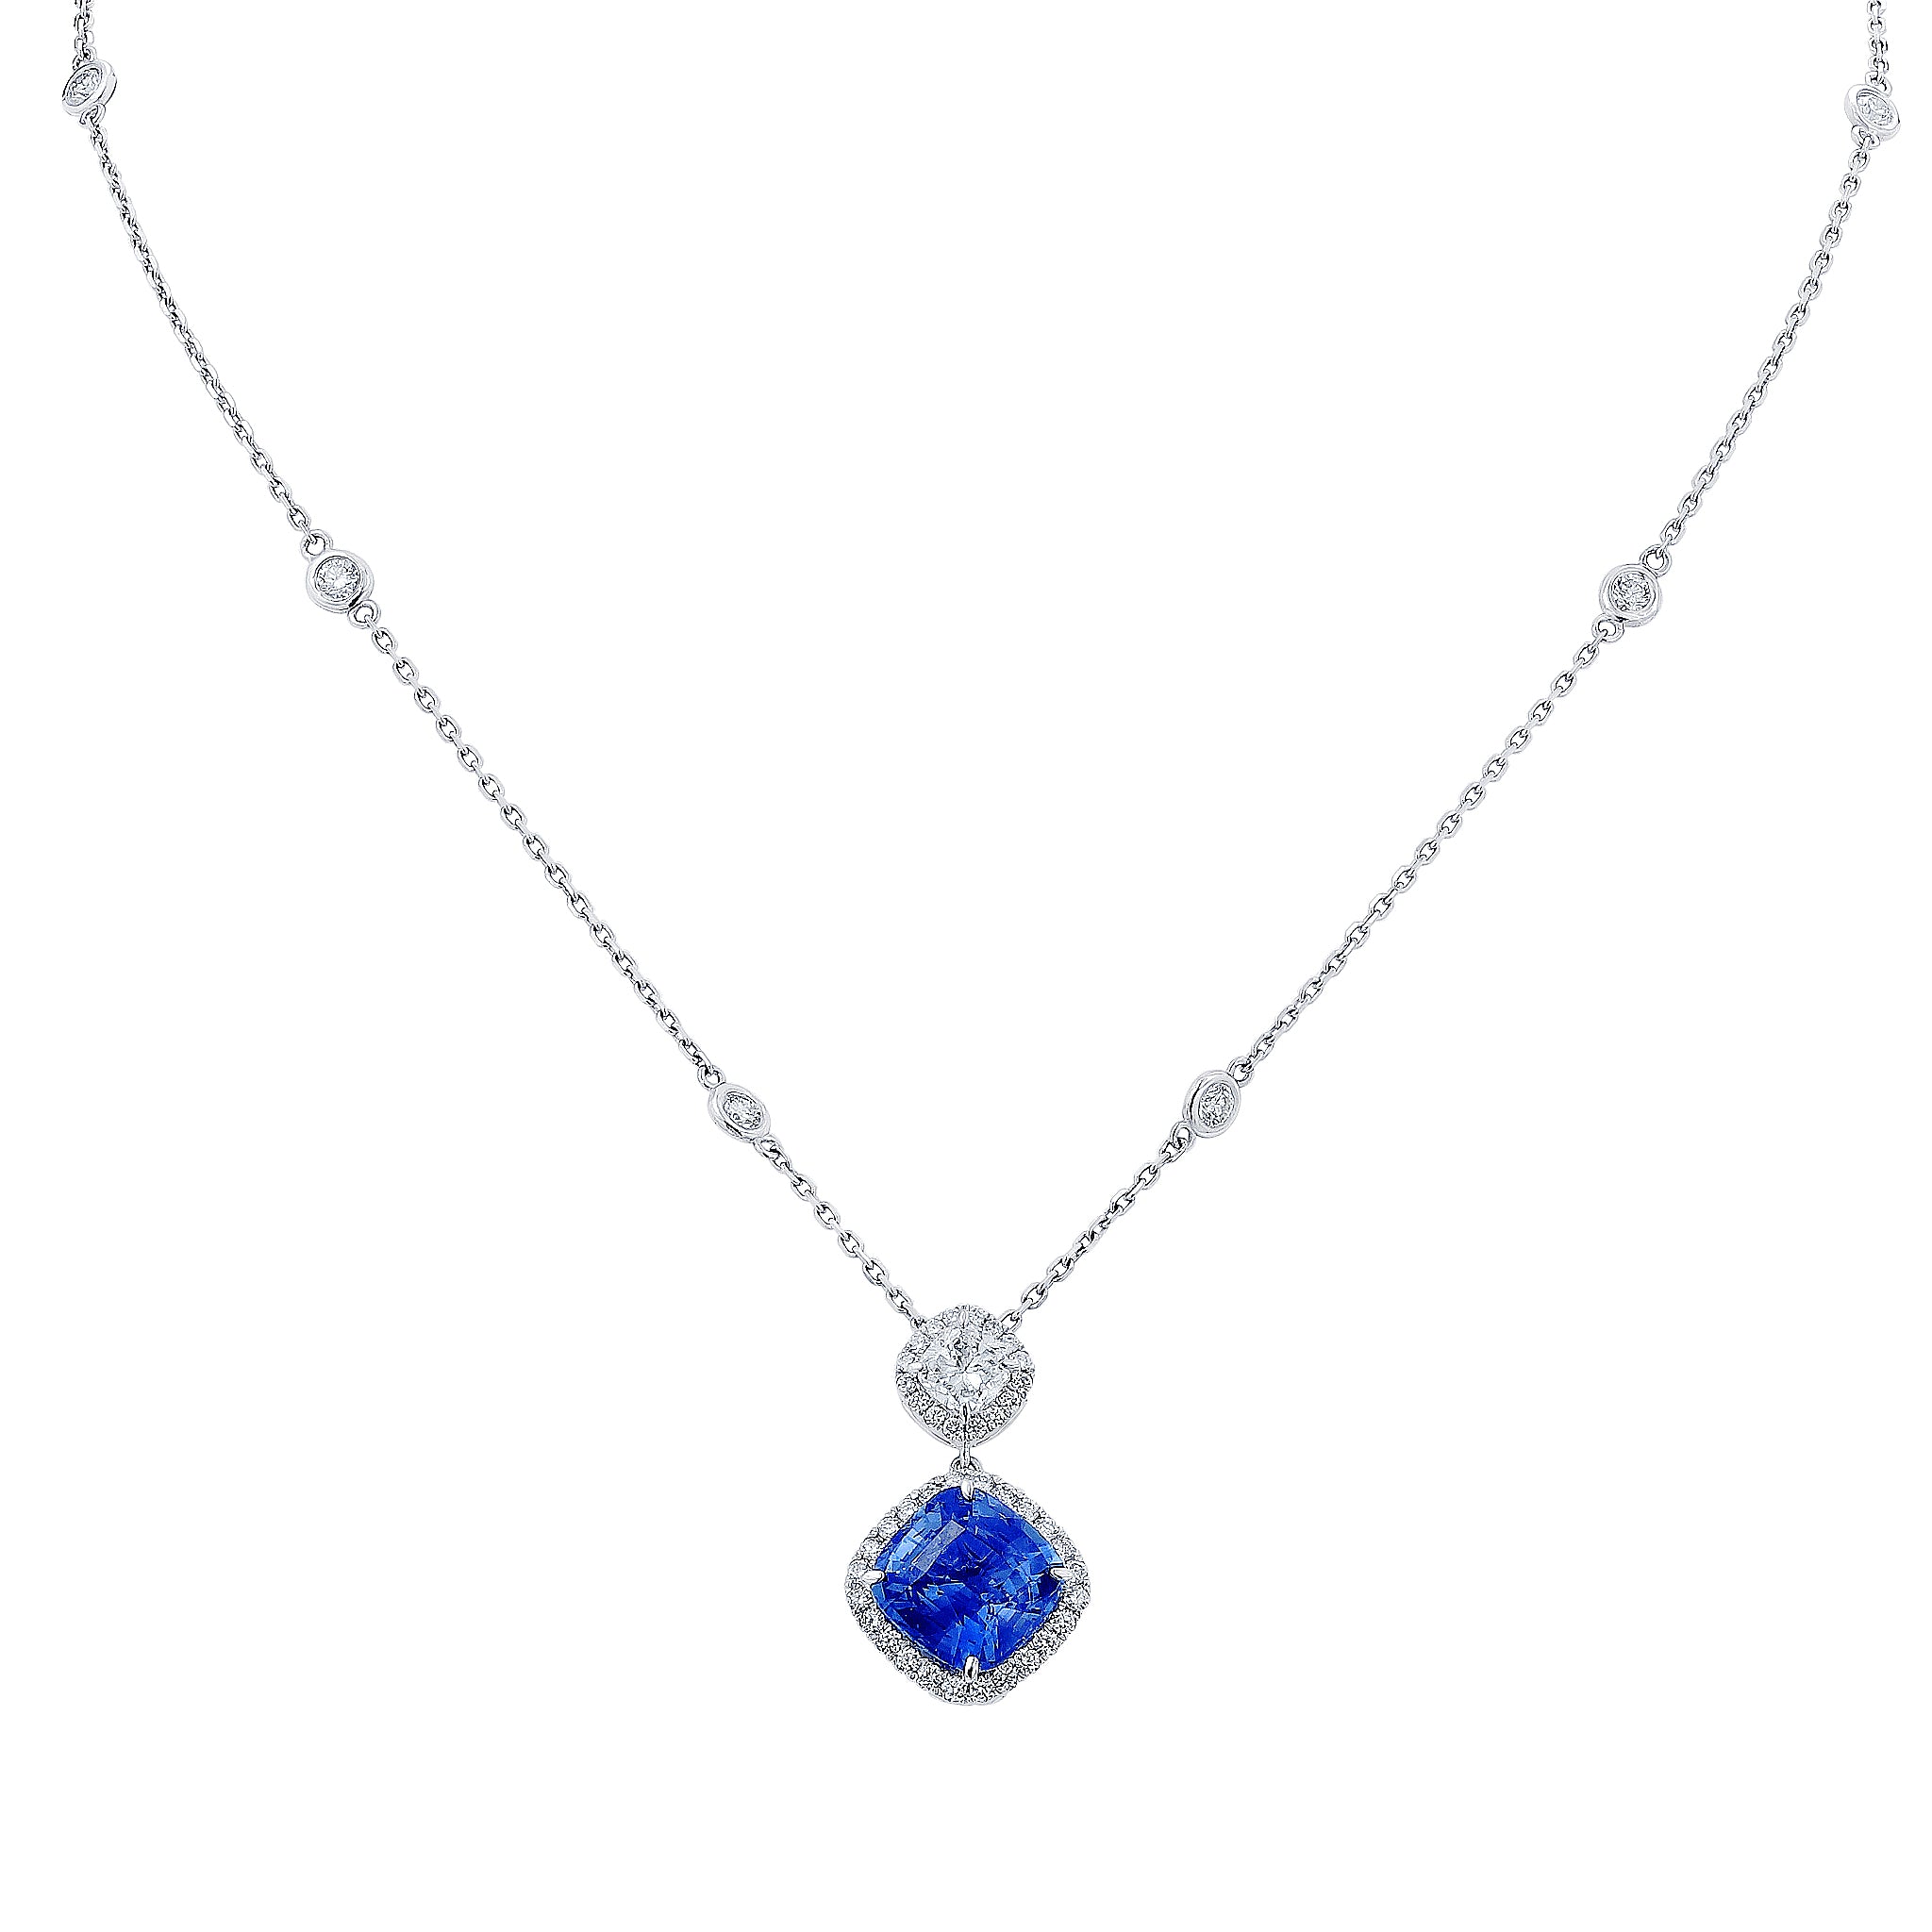 Cushion Cut Sapphire and Diamond Pendant Necklace